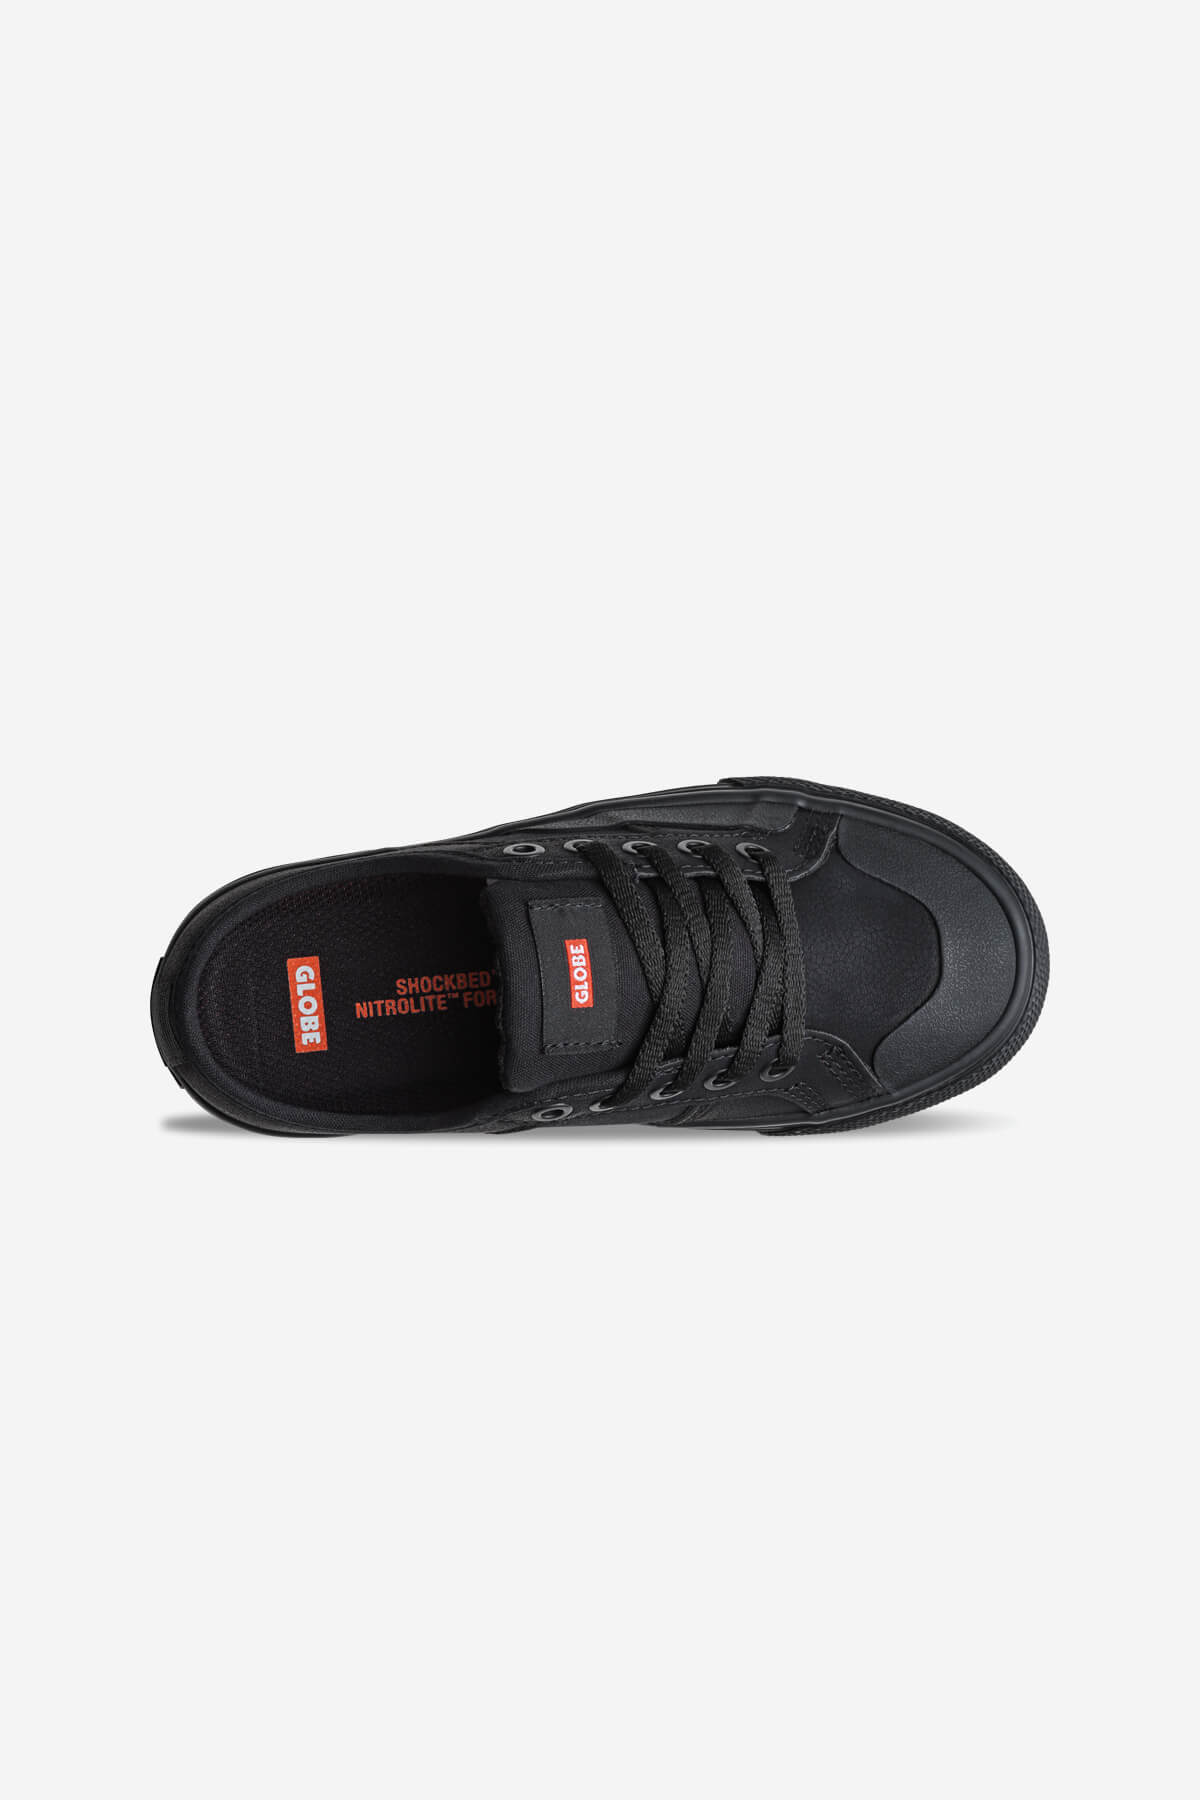 surplus-zapatos de niño negros de imitación skateboard